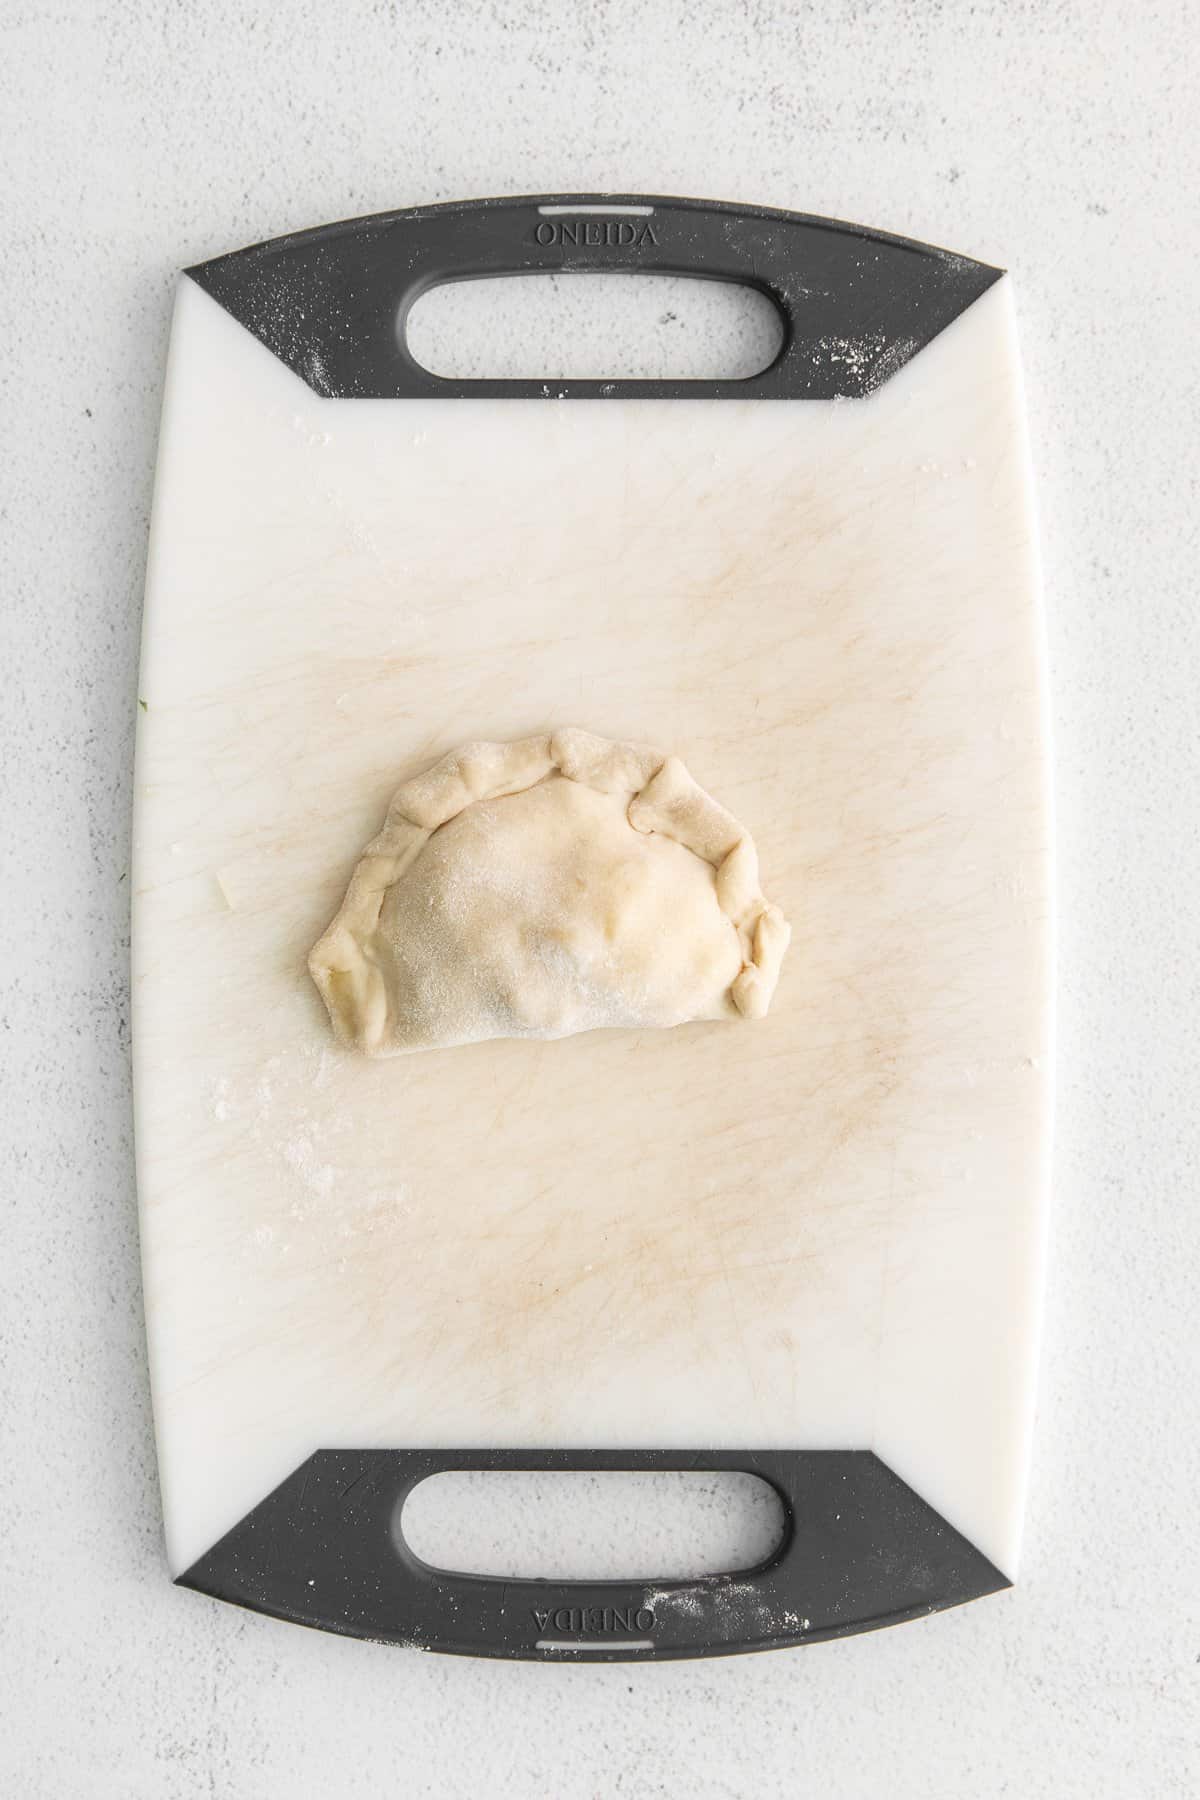 uncooked empanada on cutting board.